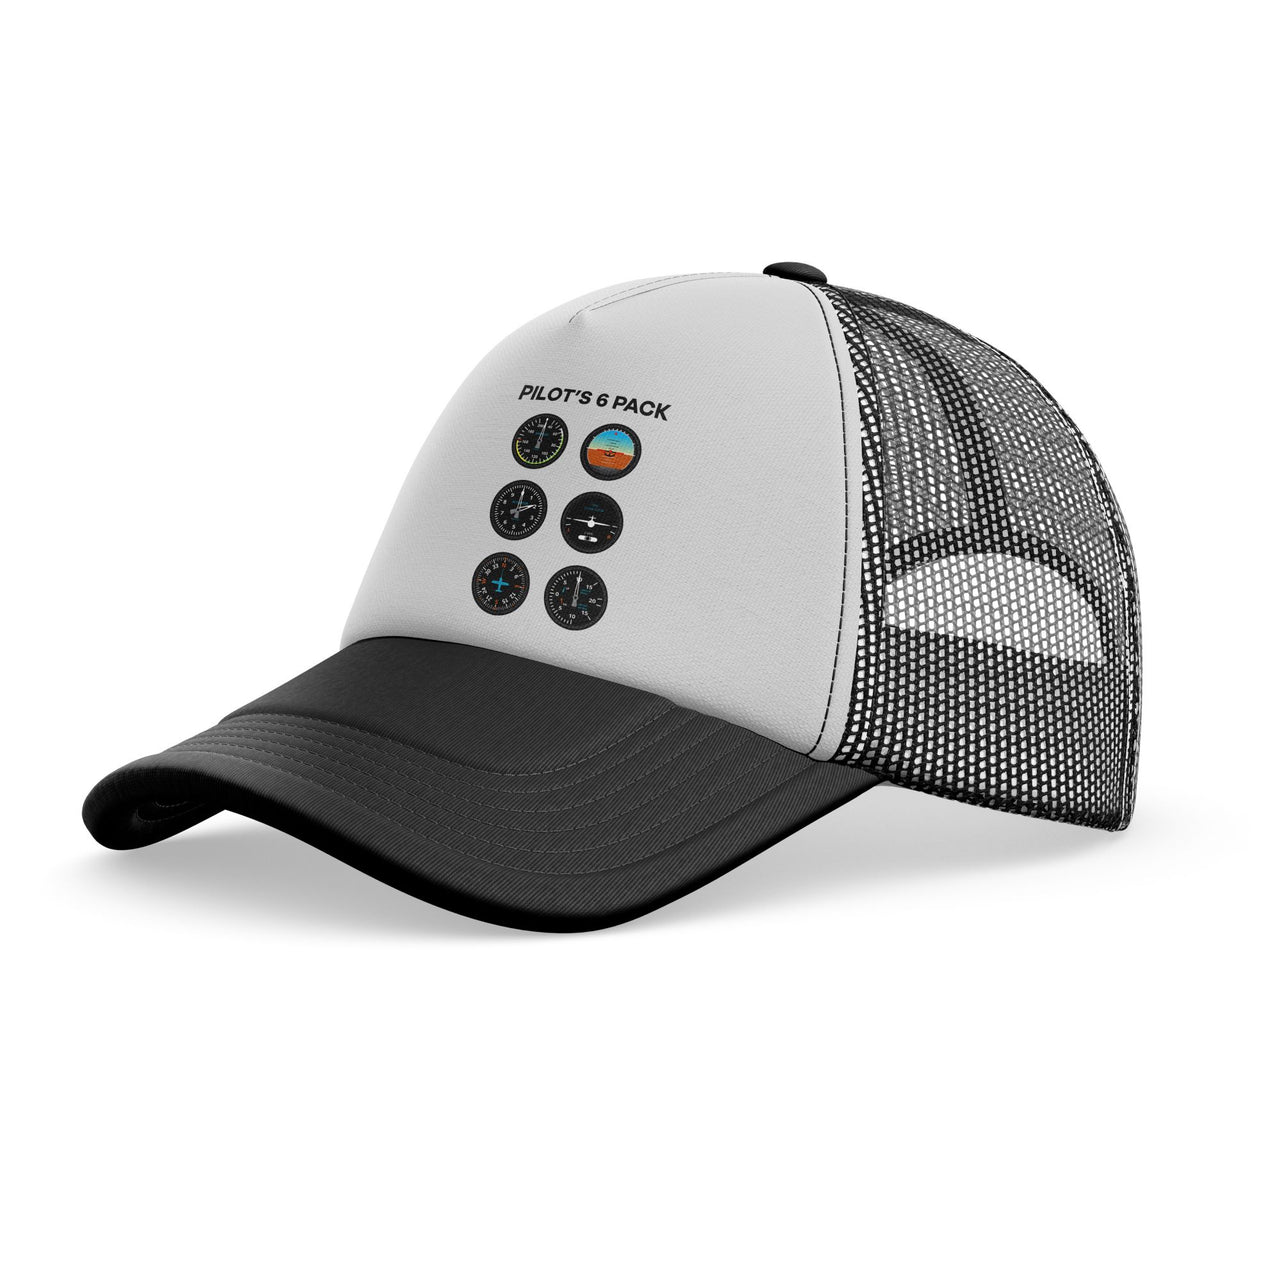 Pilot's 6 Pack Designed Trucker Caps & Hats